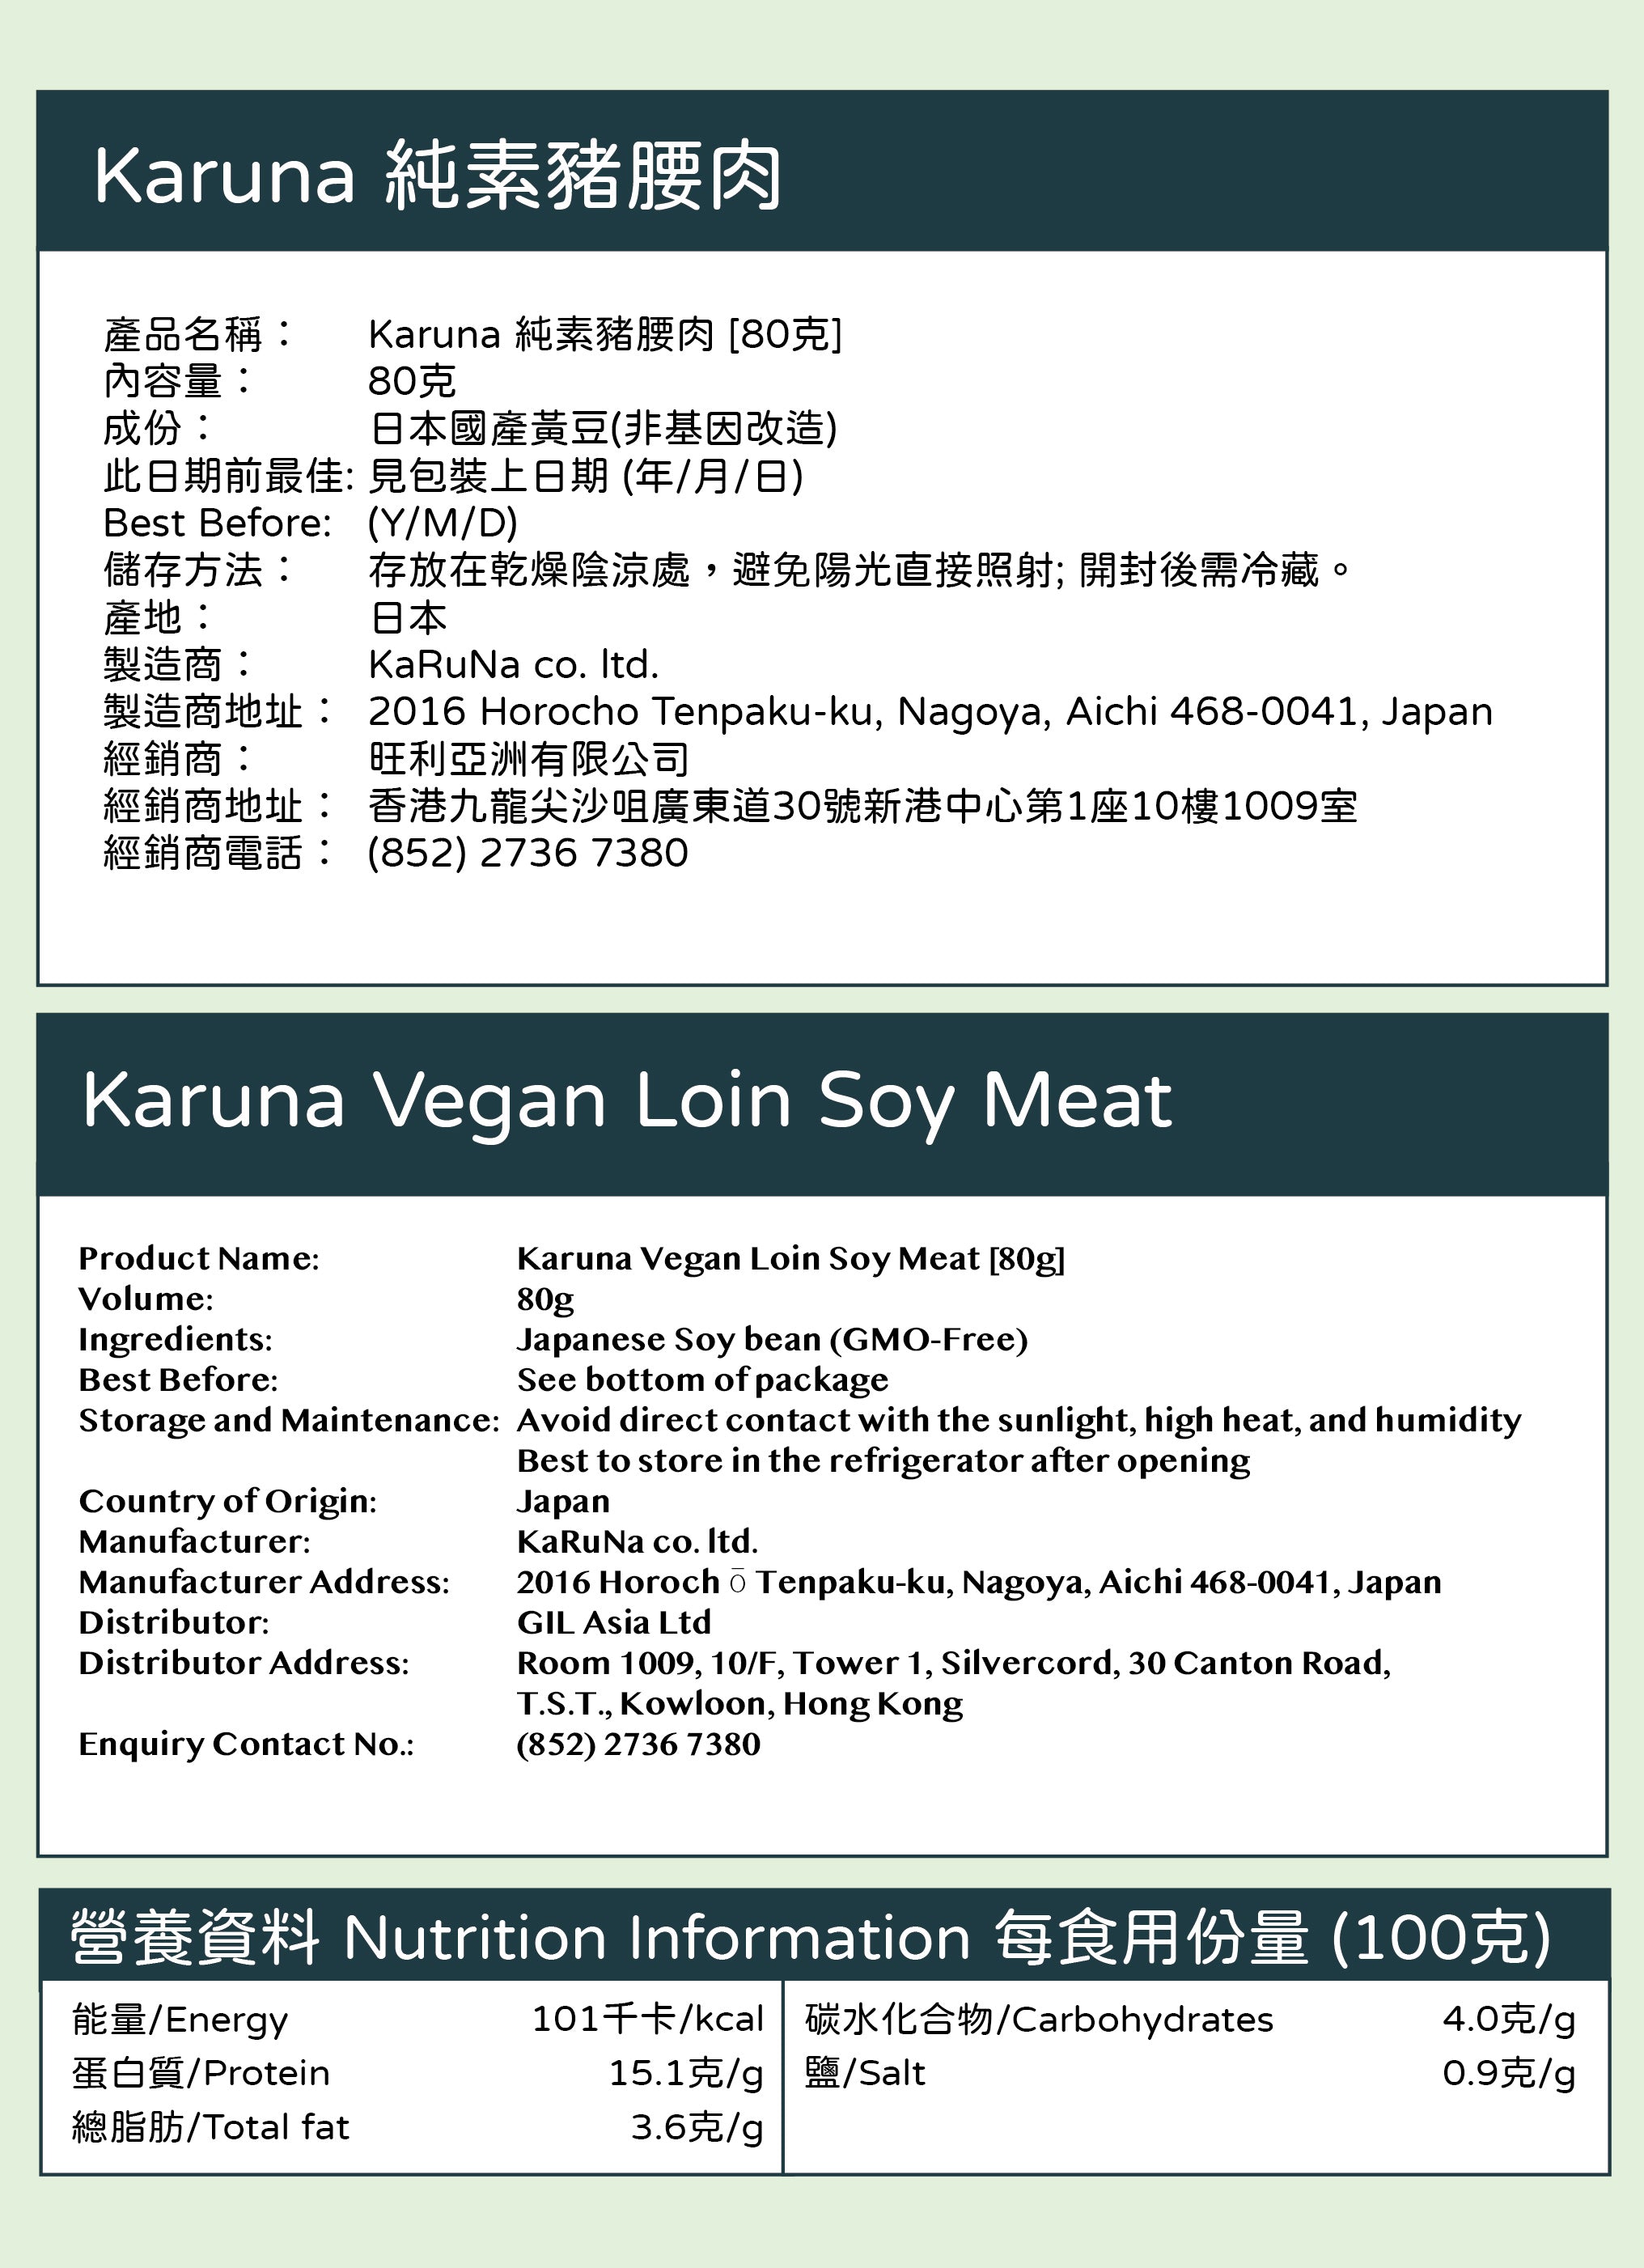 Karuna Vegan Loin Soy Meat [80g]